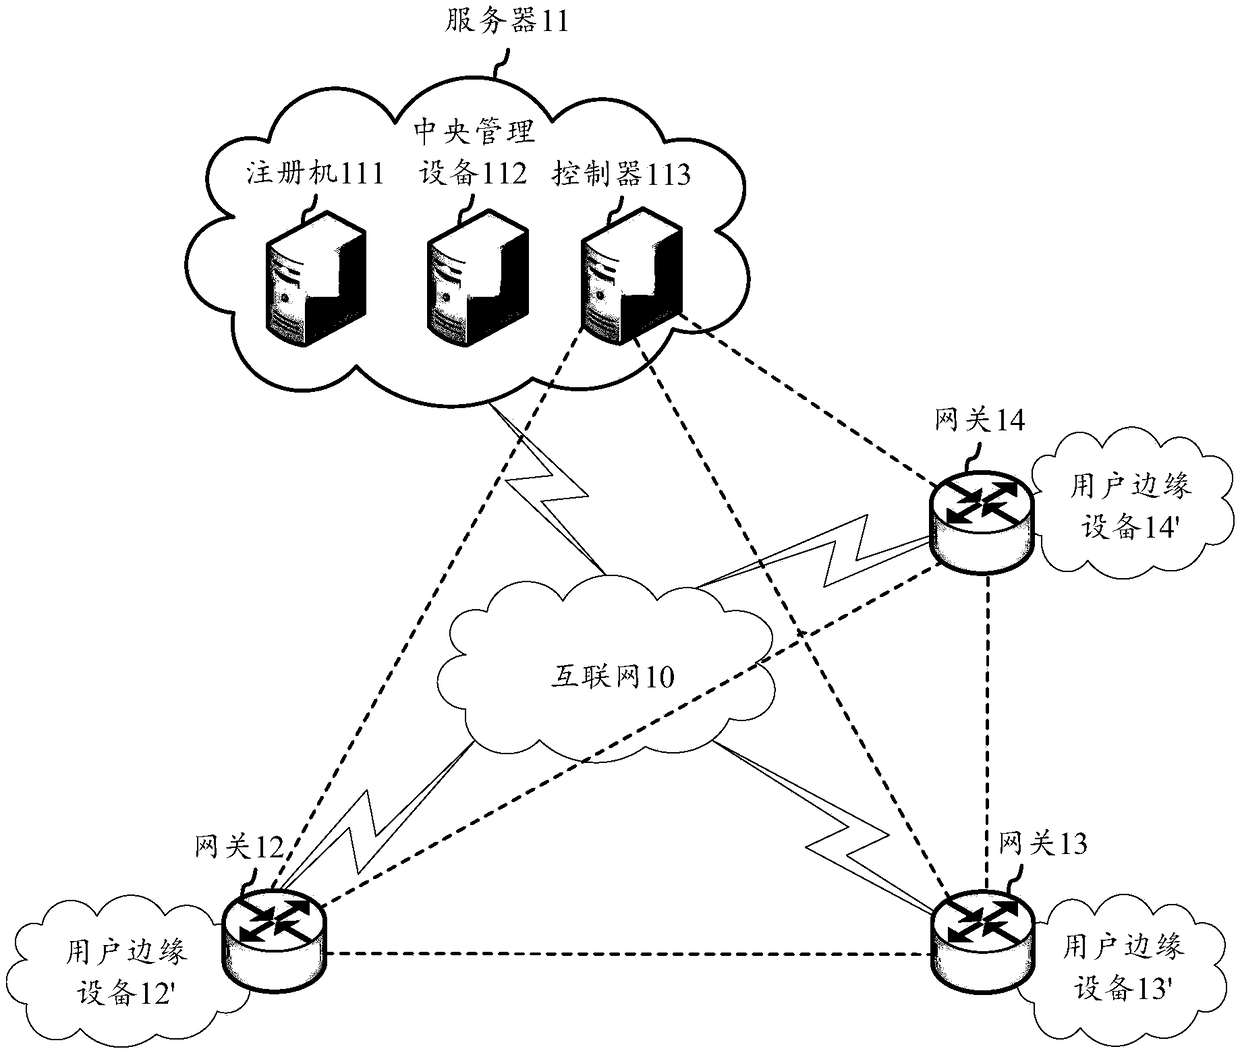 Networking method, private cloud platform and storage medium